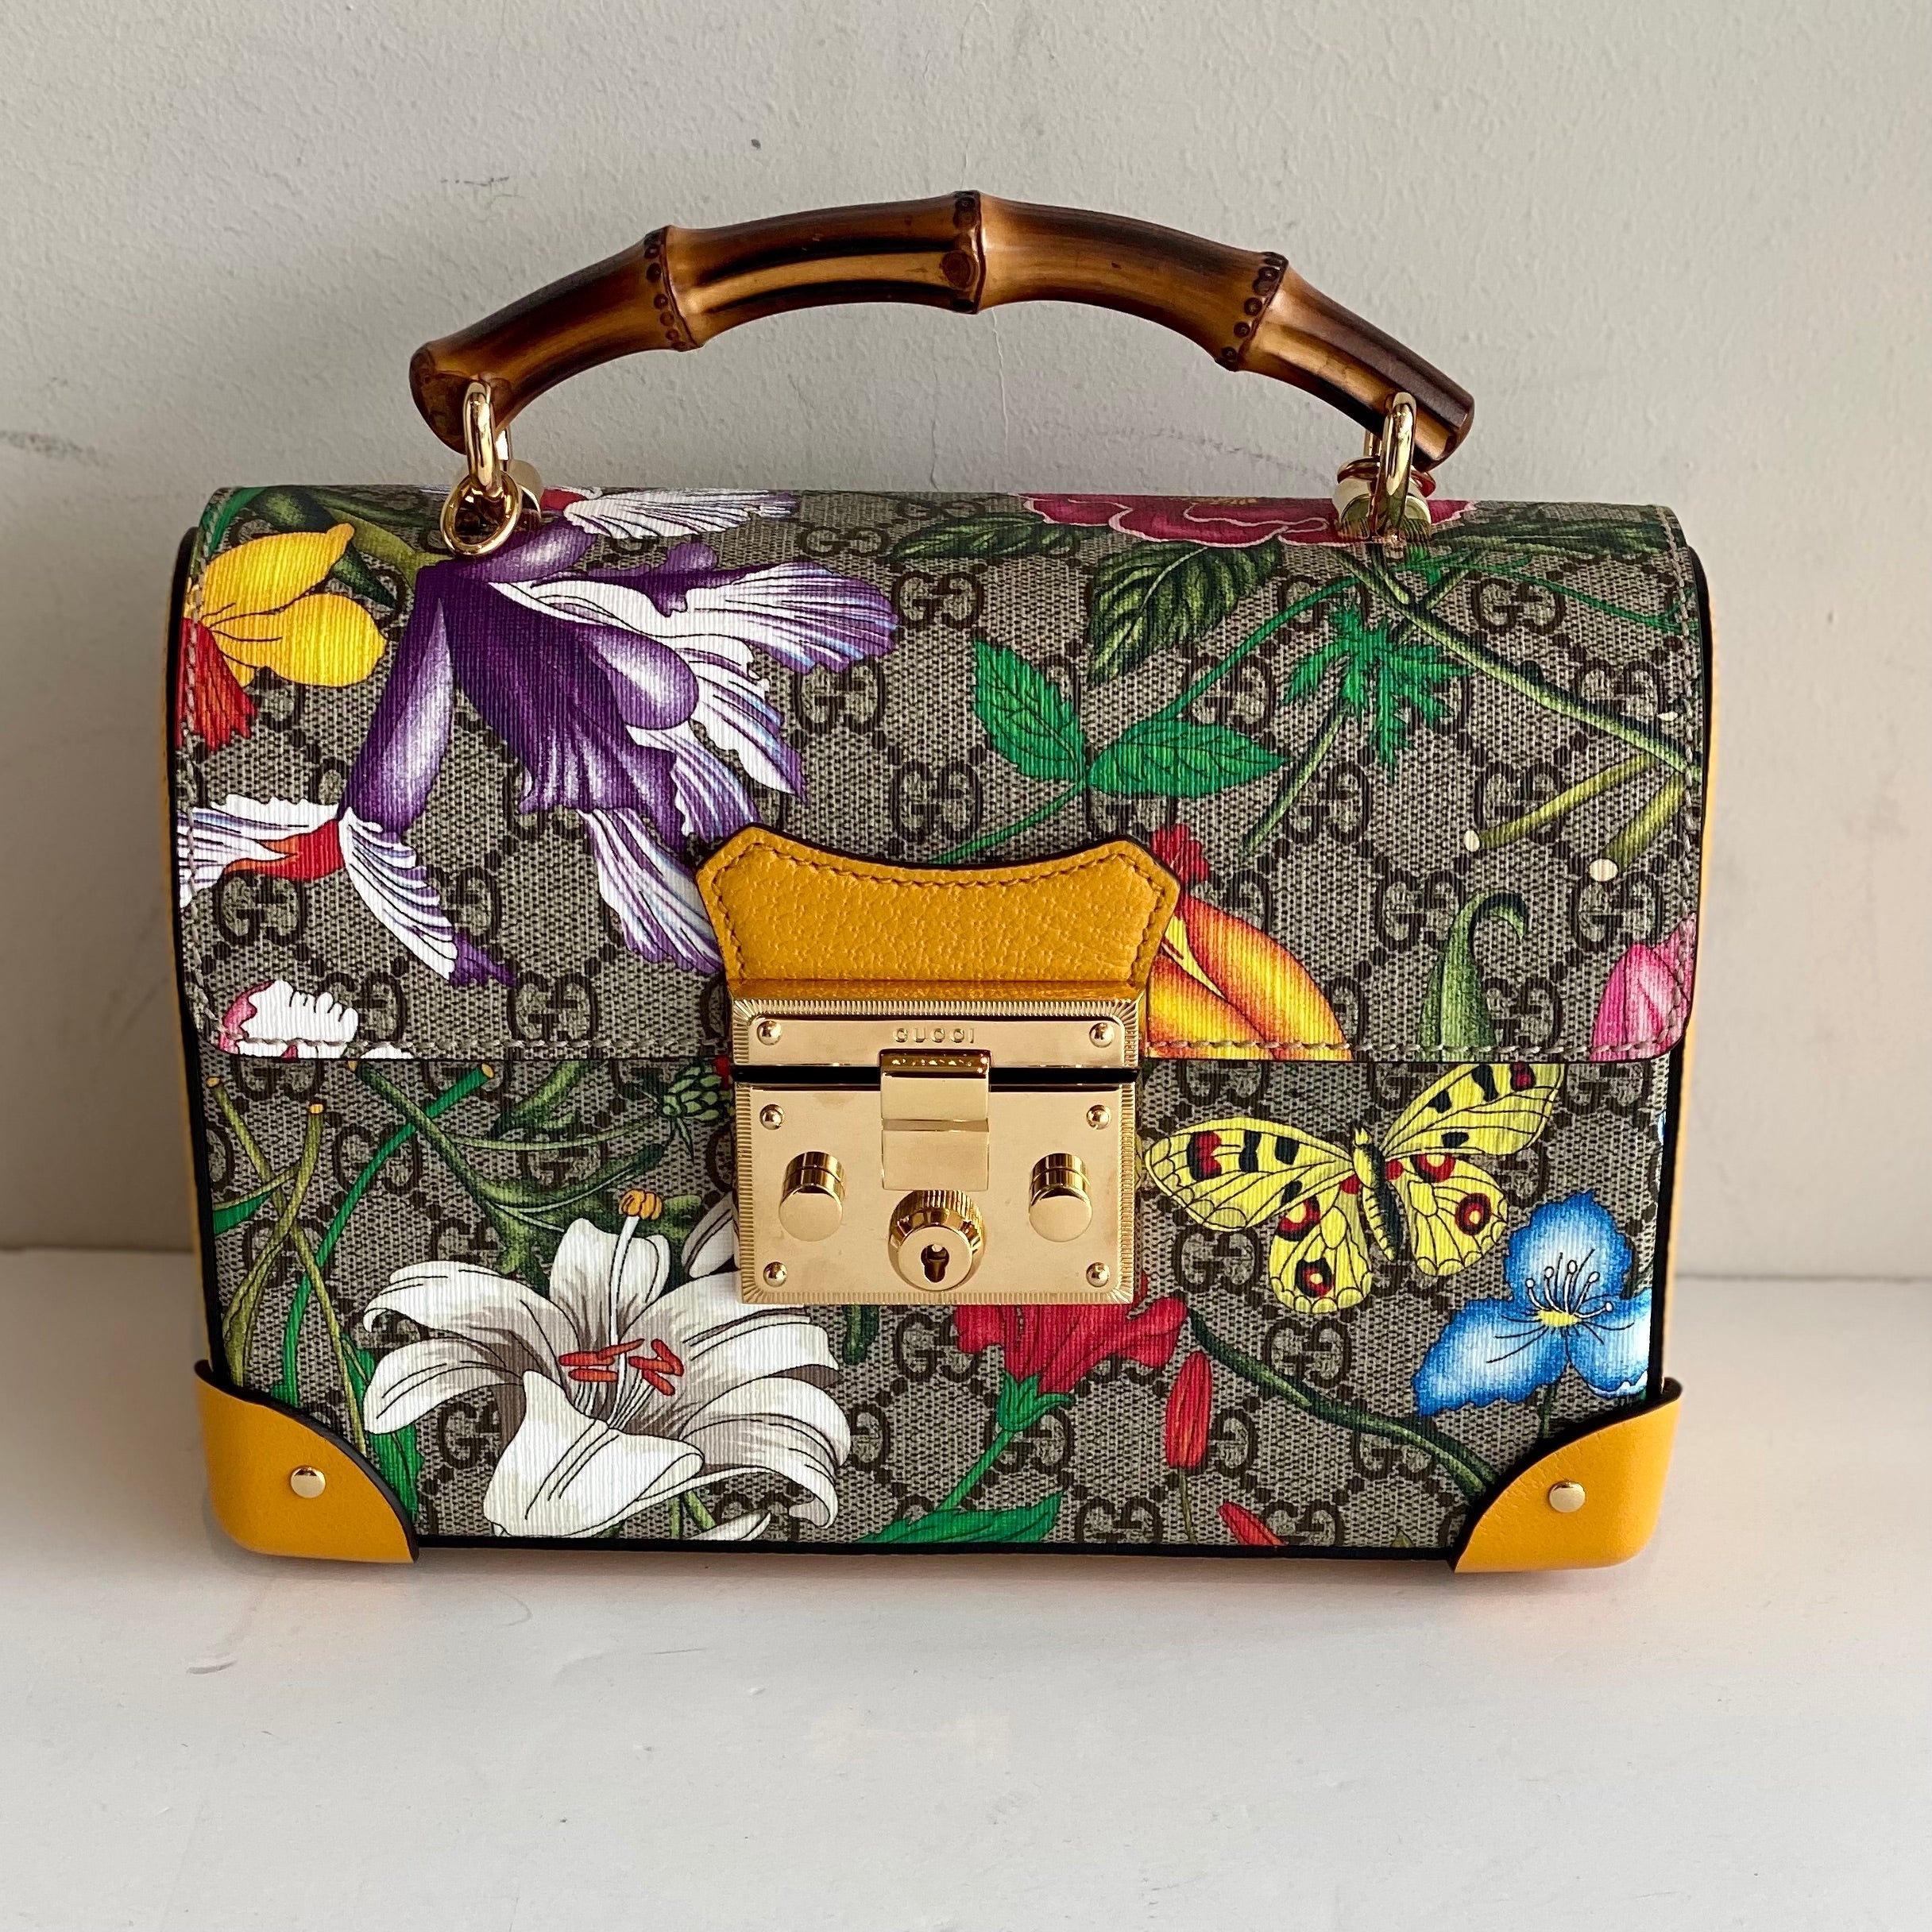 Gucci Padlock Flora Small GG Supreme Canvas Shoulder Bag Beige 498156